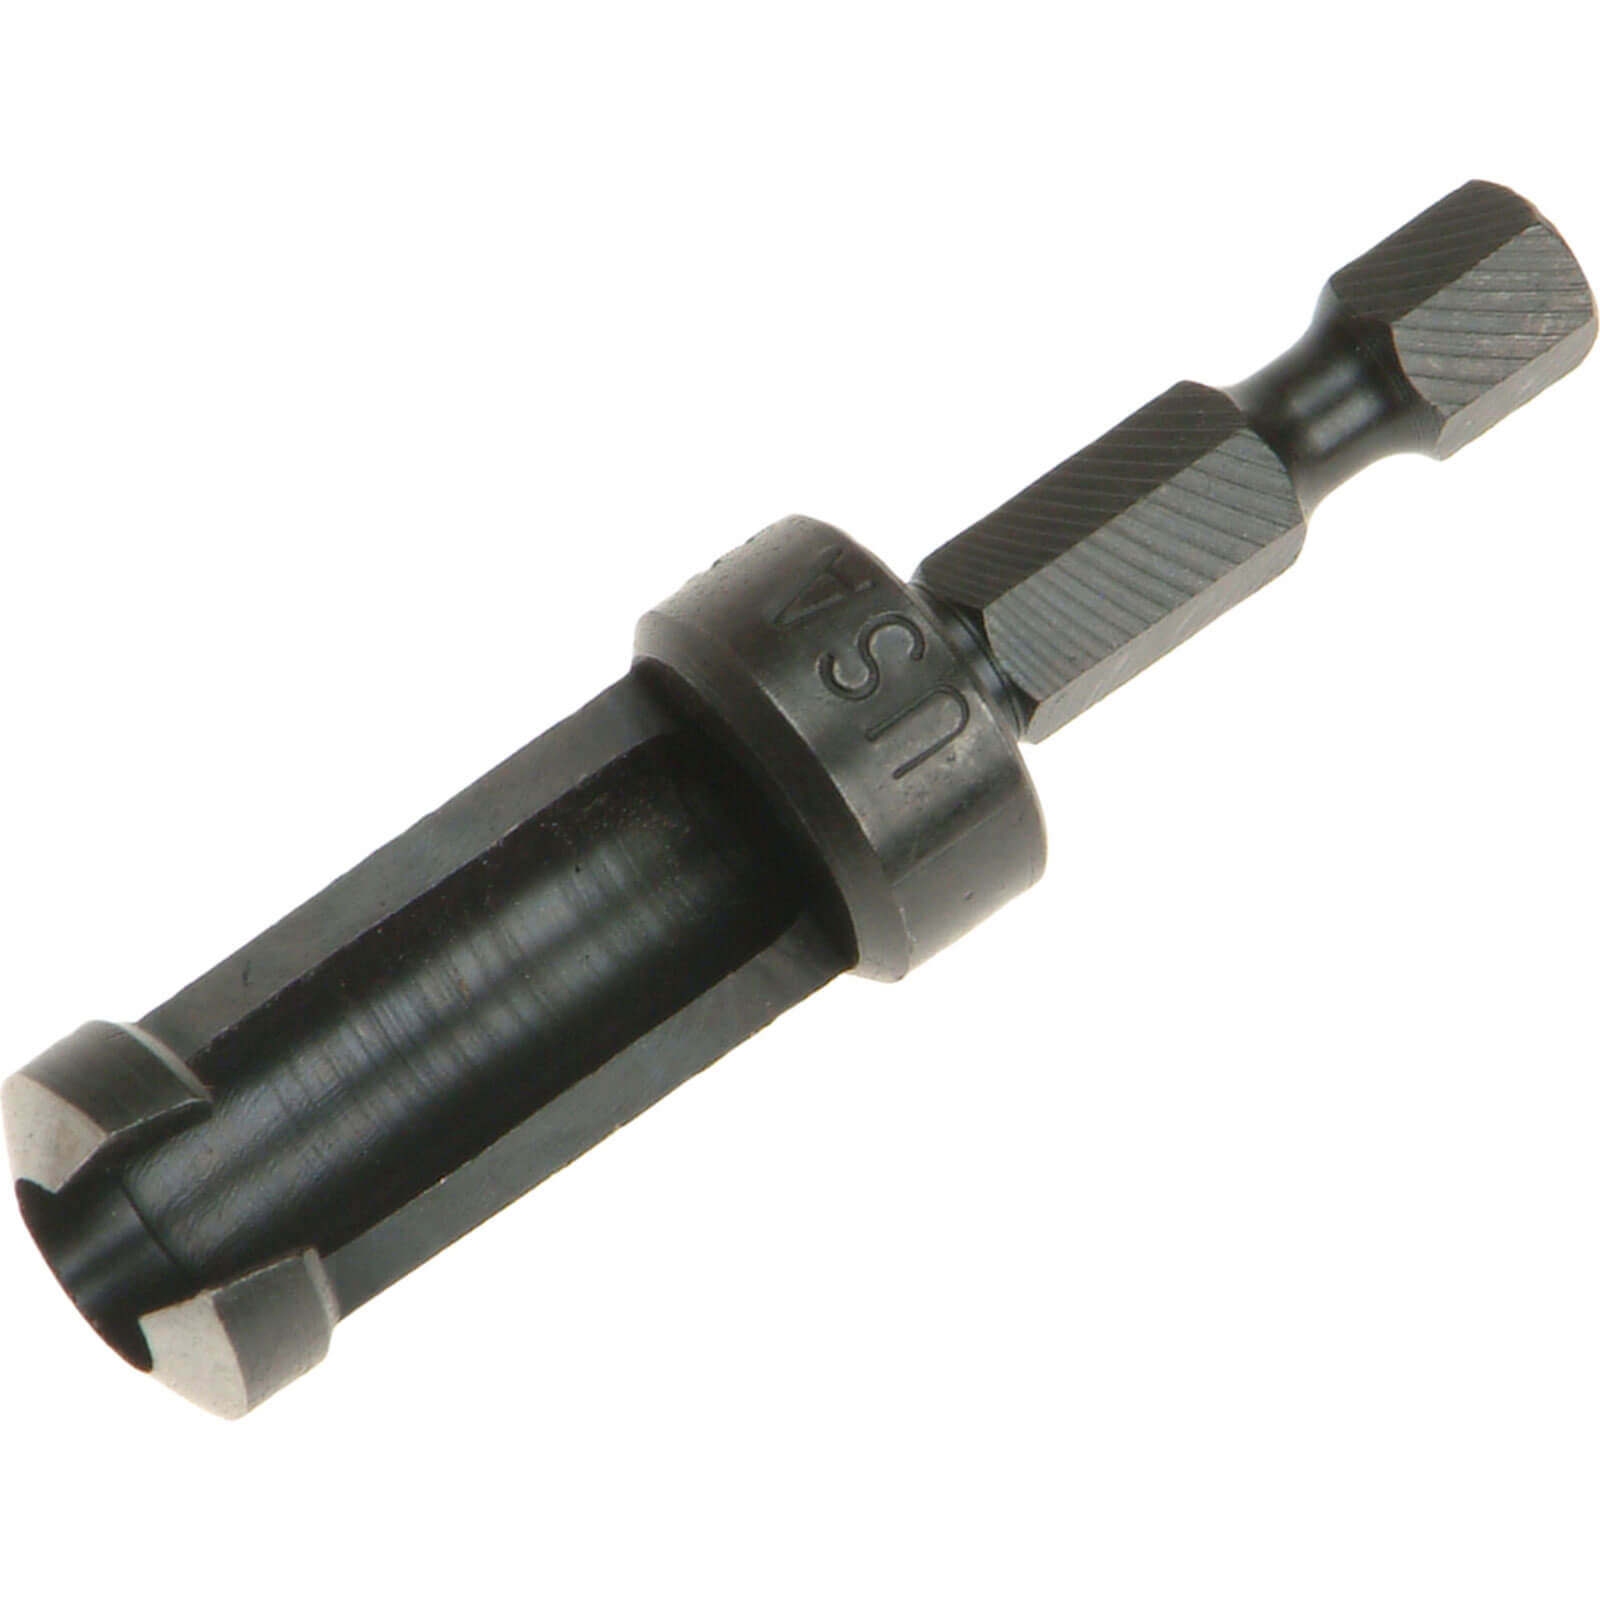 Image of Disston Plug Cutter Size 6